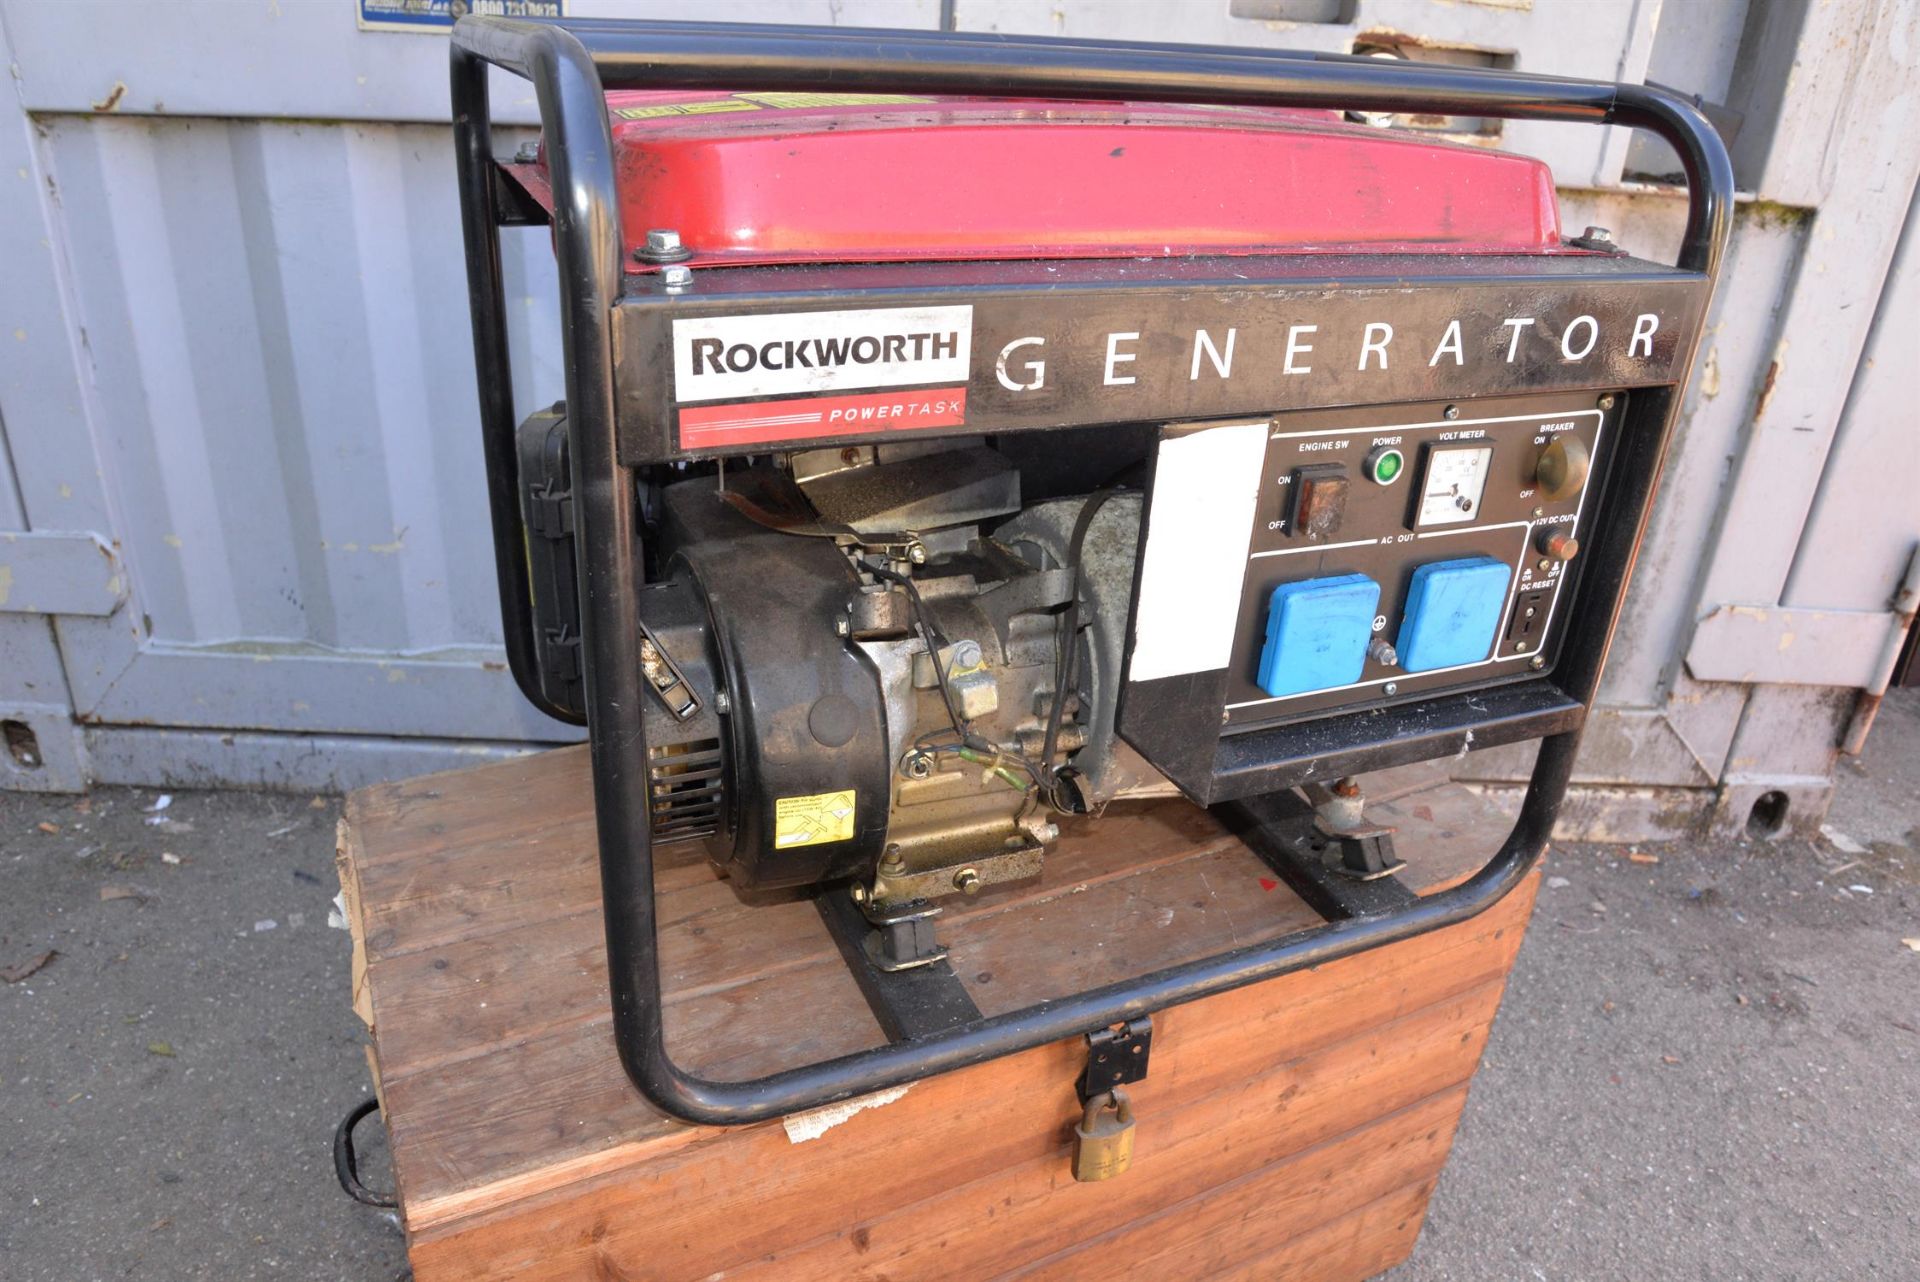 Rockworth generator - Image 2 of 2